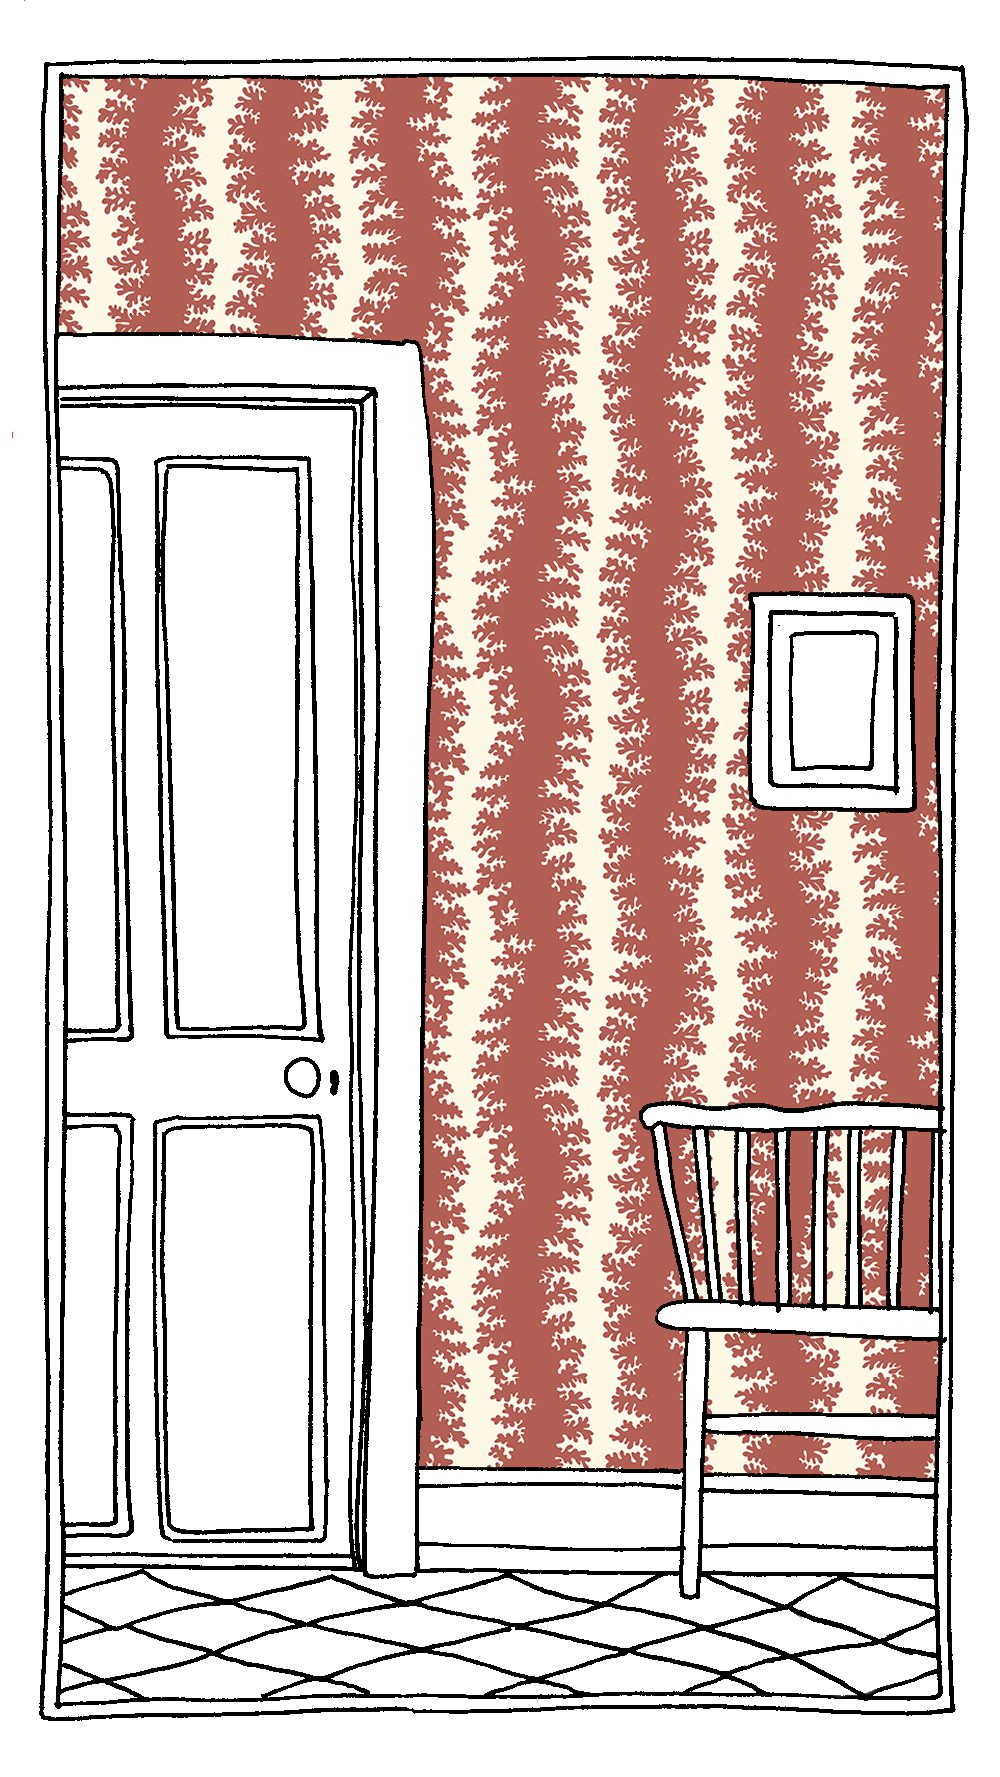 Josephine-Munsey-Roll-collection-wallpaper-elkhorn-strope-scalloped-wave-stripe-wallpaper-elkhork-edged-silhouette-soft-edged-wide-stripe-red-topping-clarke-white